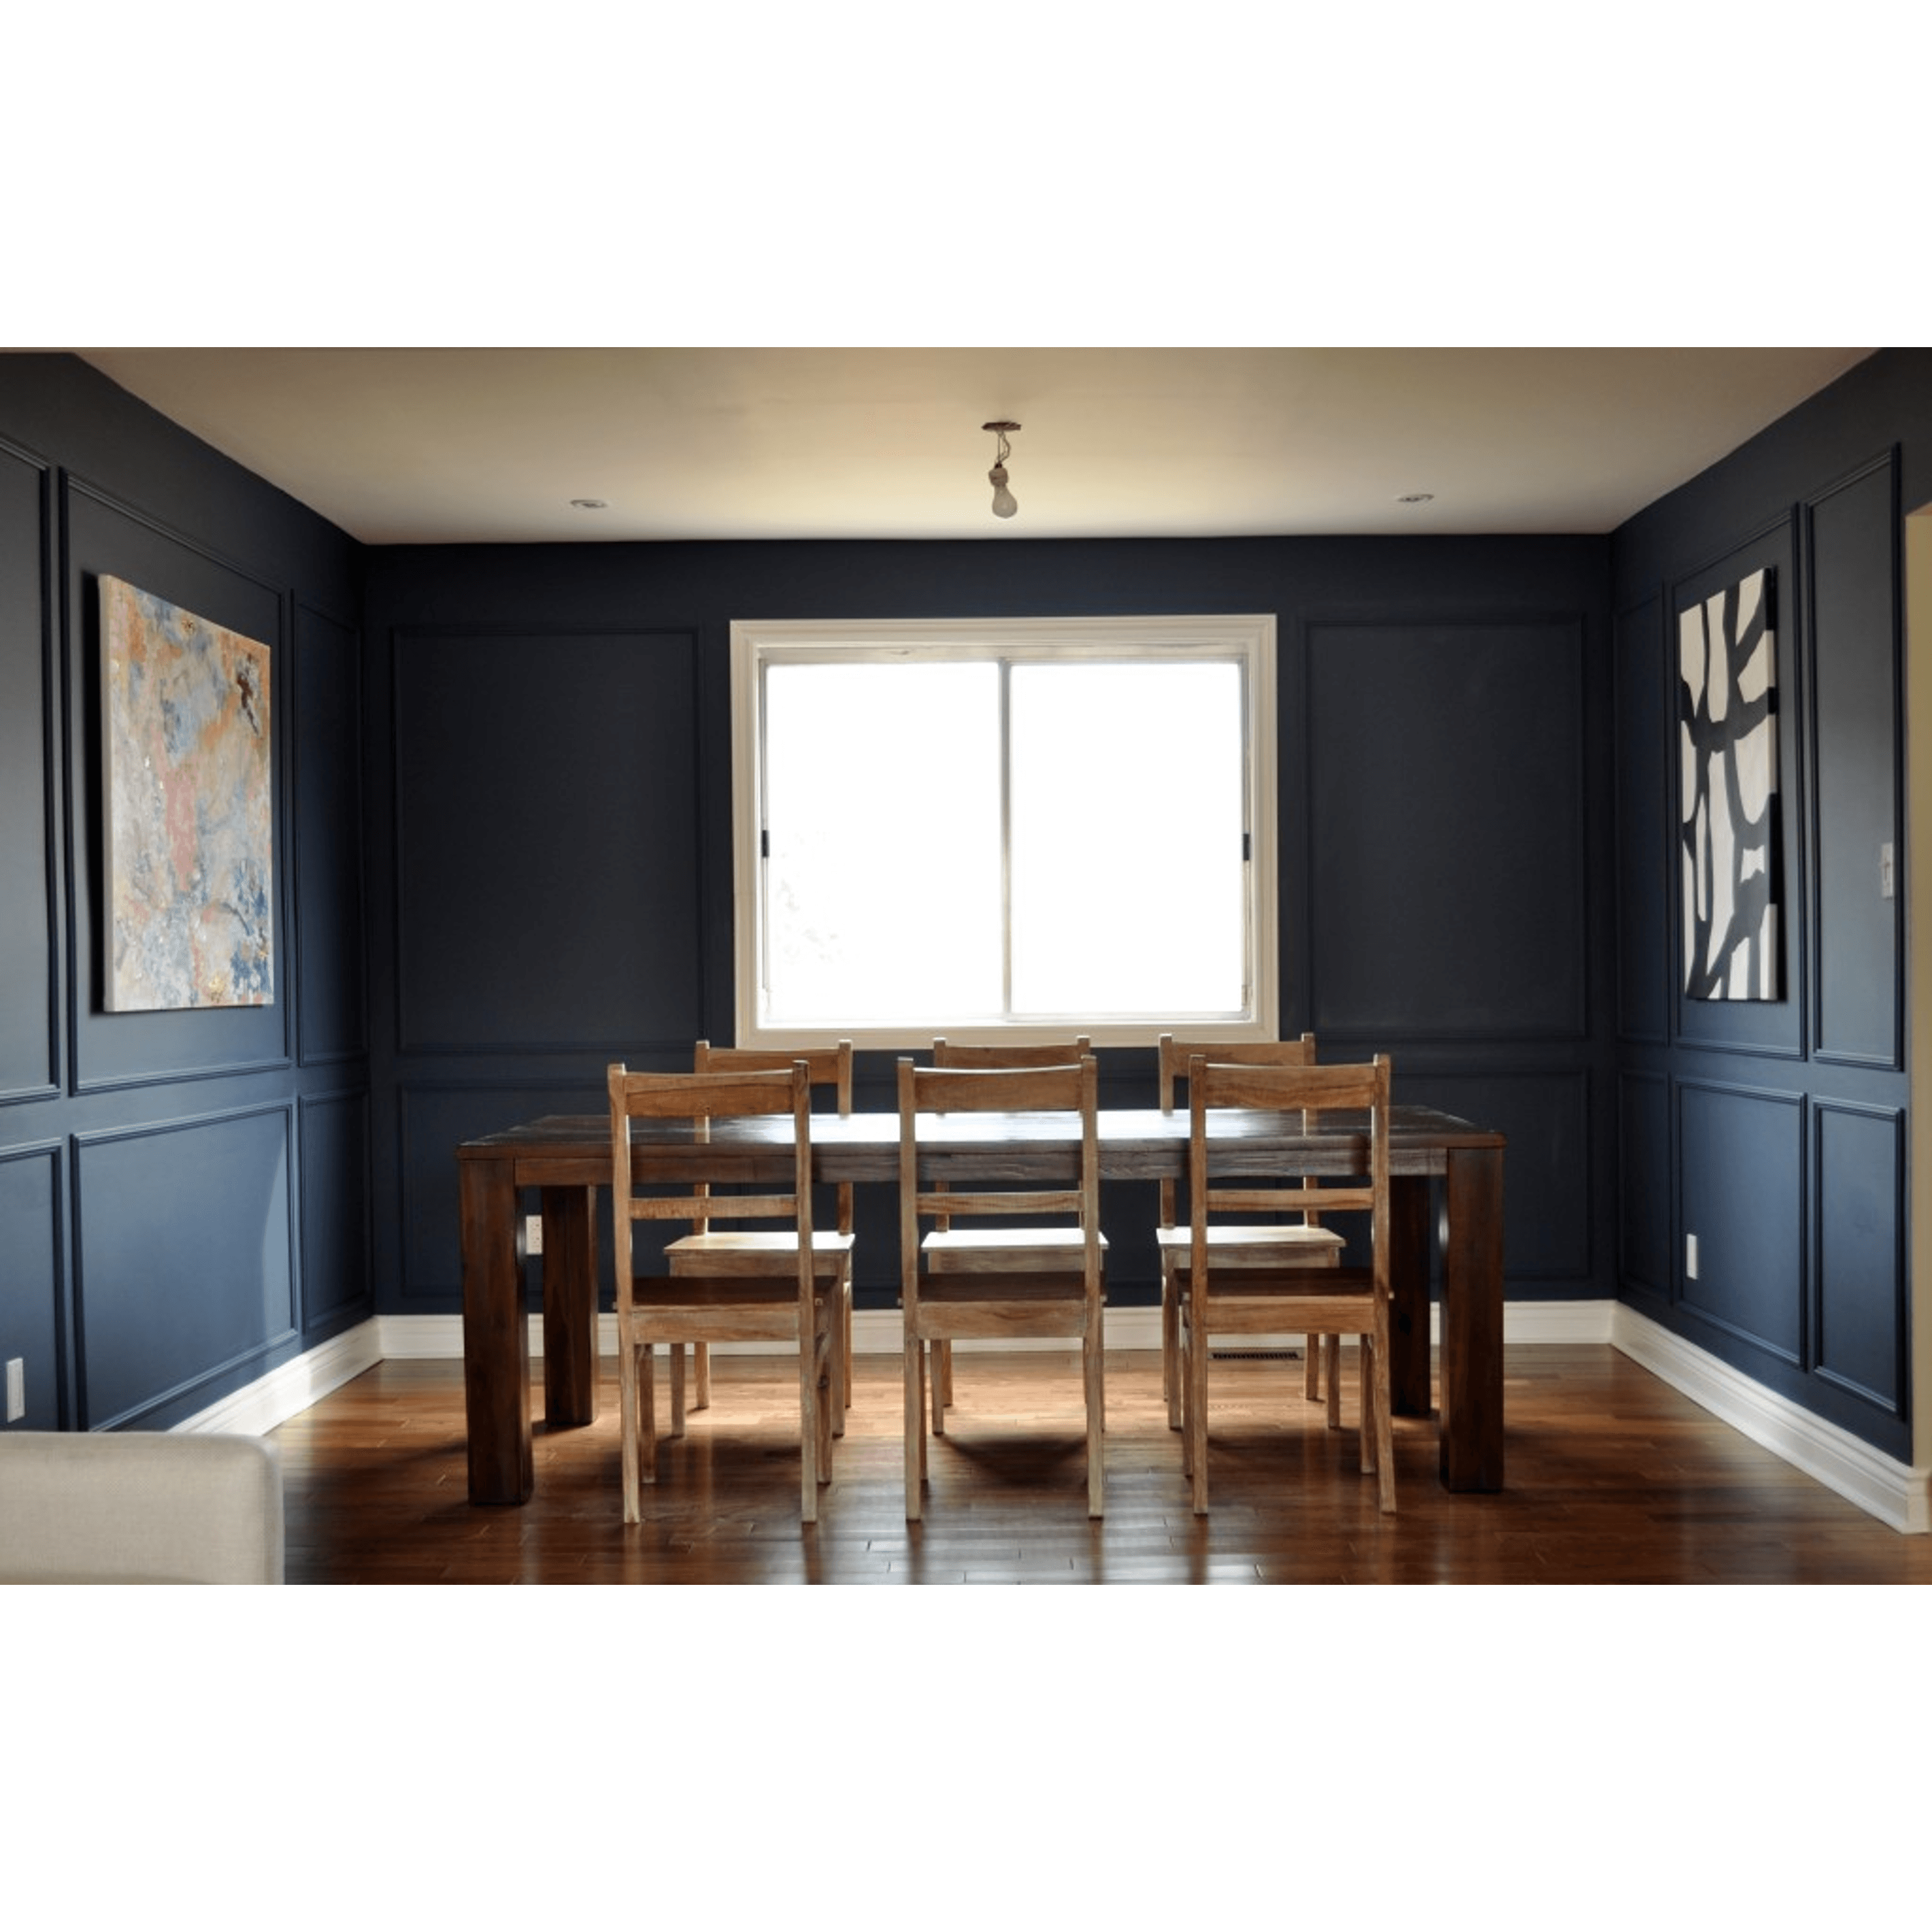 Velvet-Toolbox-Rich-Textured-Walls-for-the-Dining-Room-1024x656.jpg